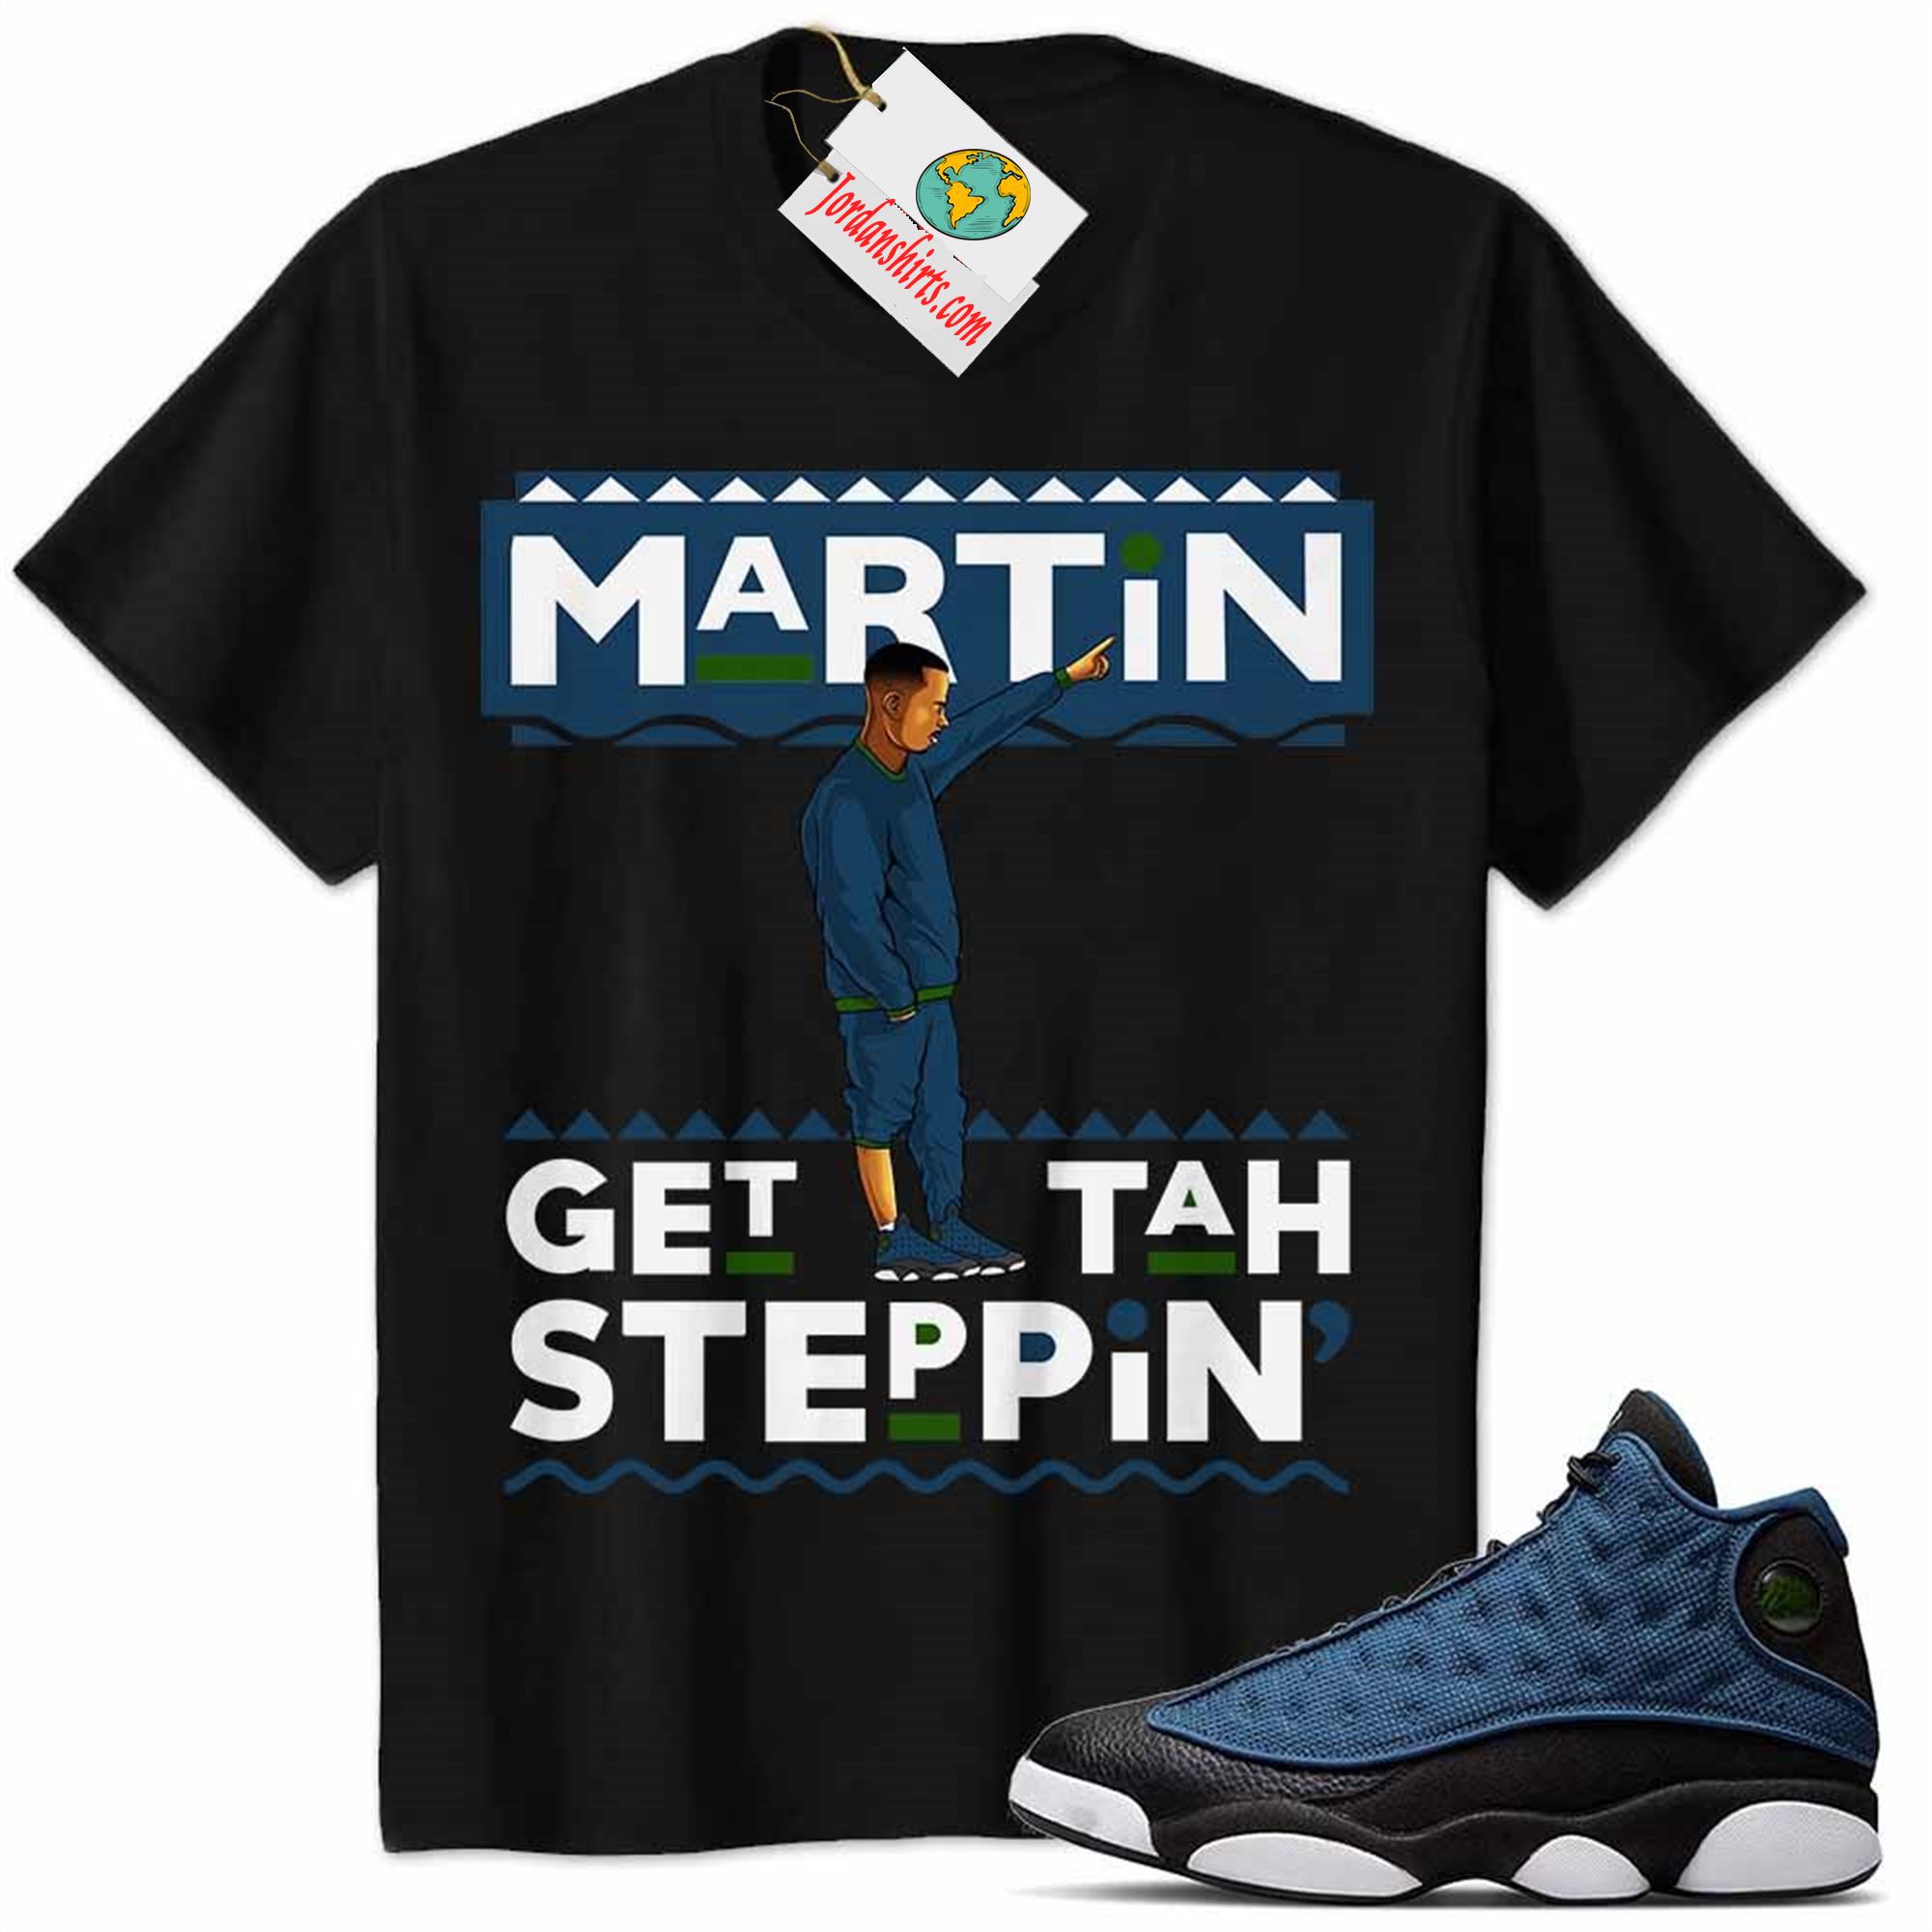 Jordan 13 Shirt, Jordan 13 Brave Blue Shirt Shirt Martin Get Tah Steppin Black Plus Size Up To 5xl